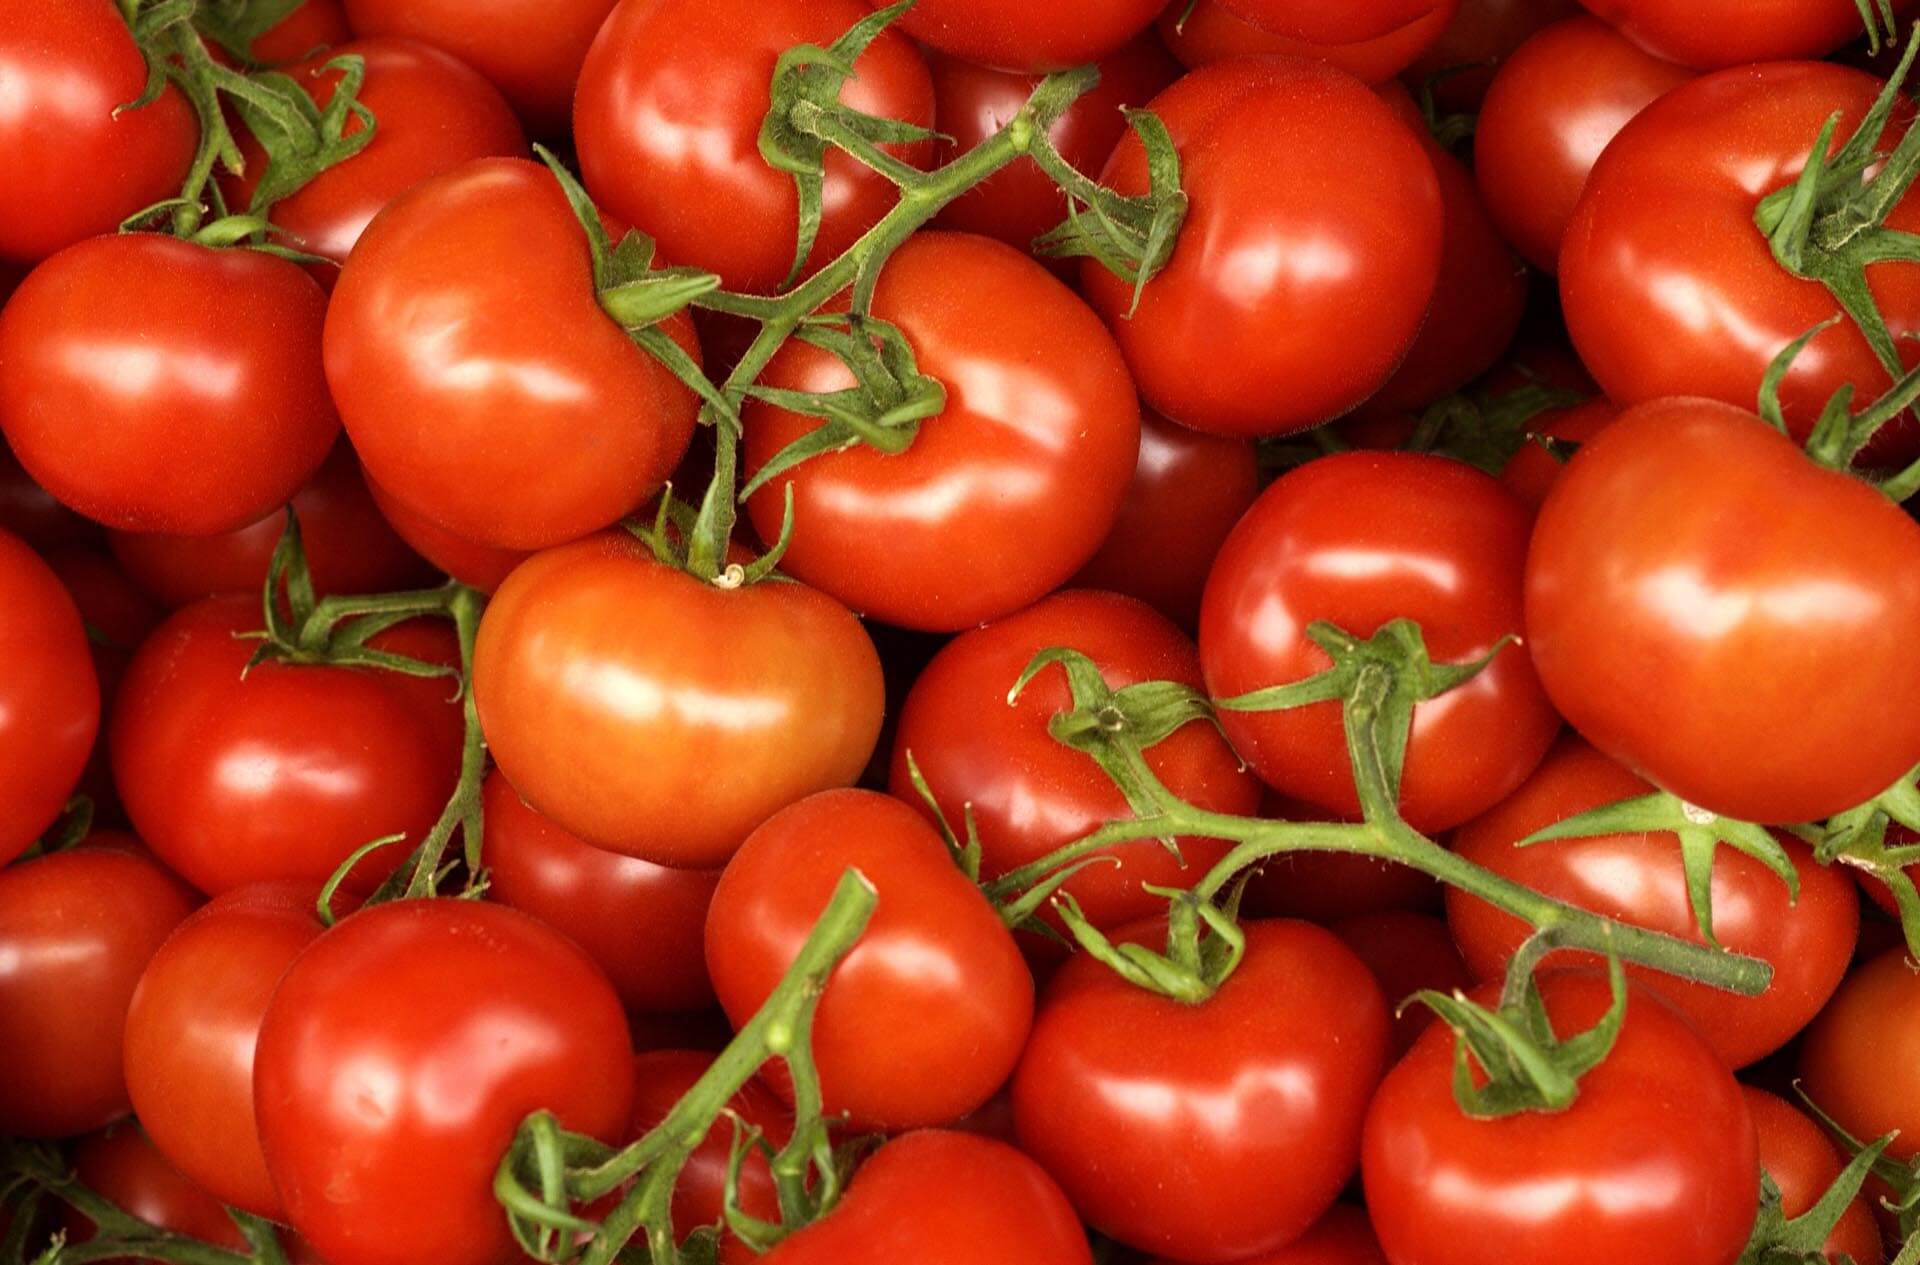 De tomaat: groente of vrucht? FreshMAG